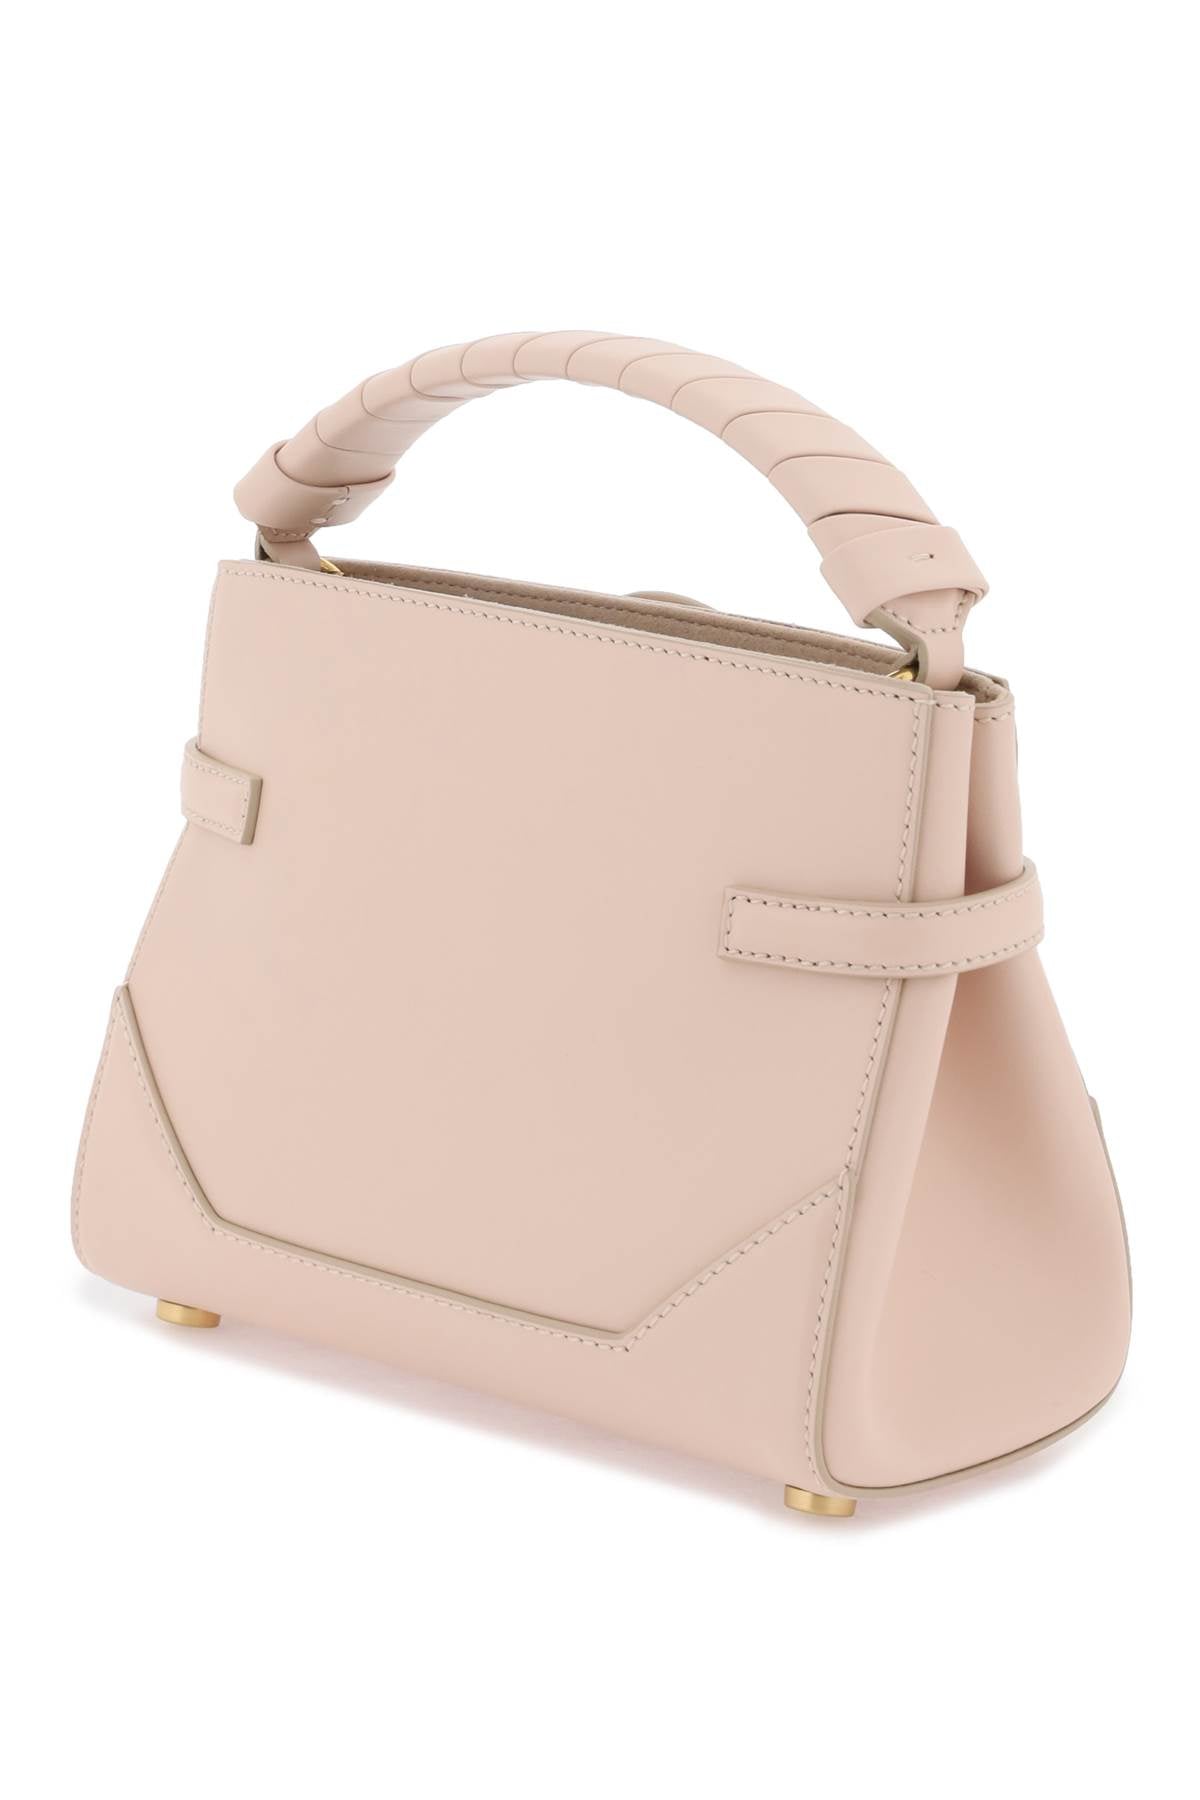 Balmain B Buzz 22 Top Handle Handbag   Rosa